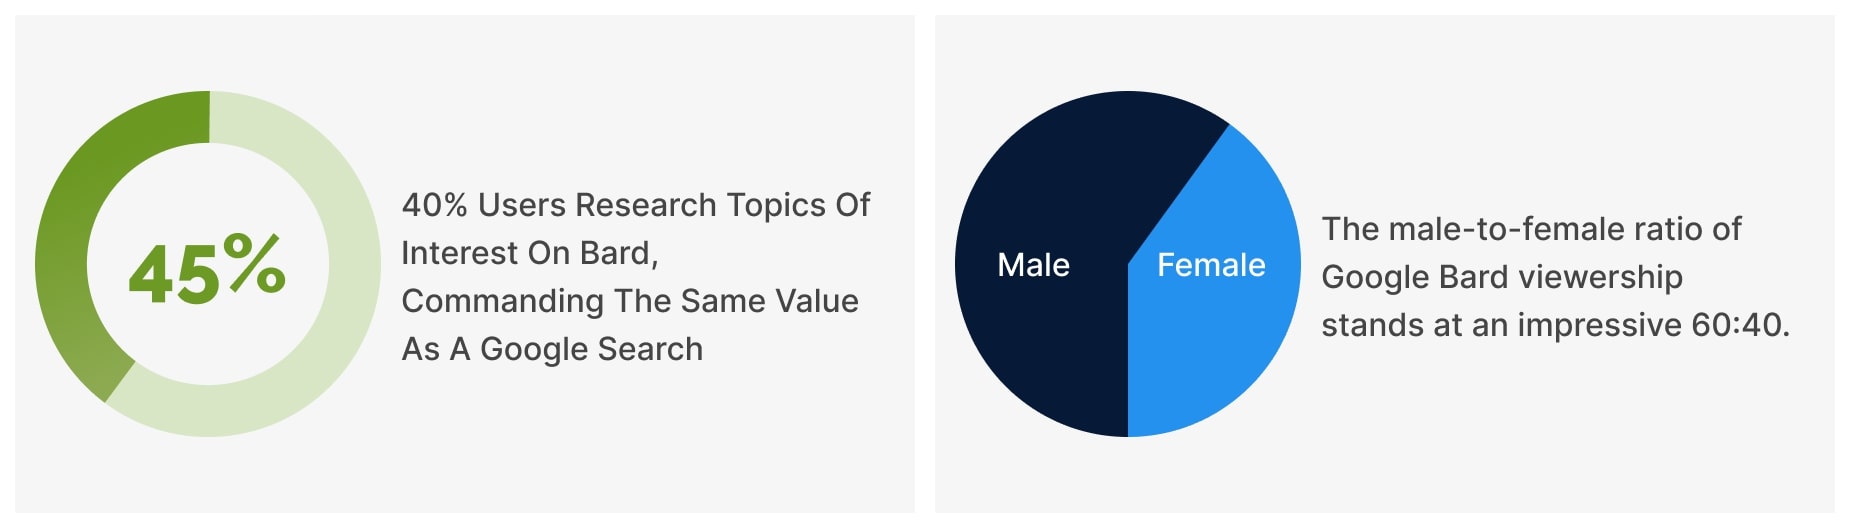 Male To Female Ratio of Google Bard